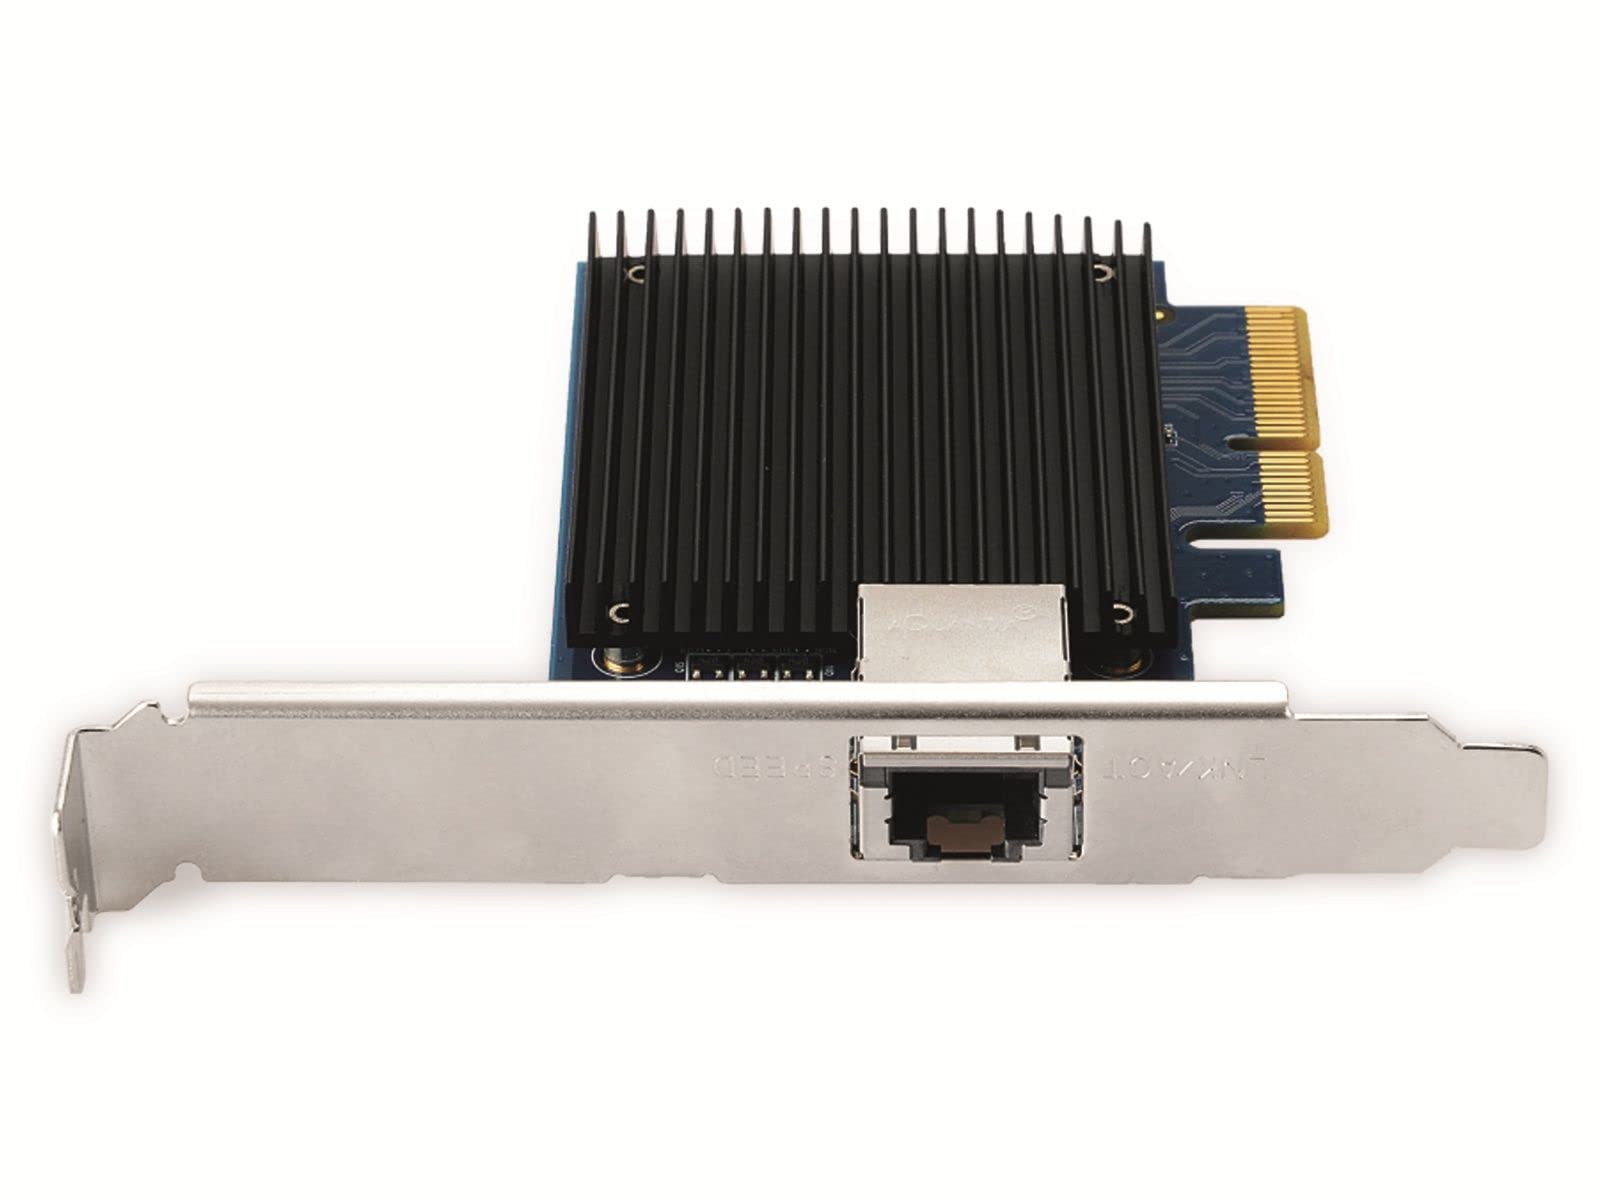 10 GIGABIT ETHERNET PCI EXPRESS